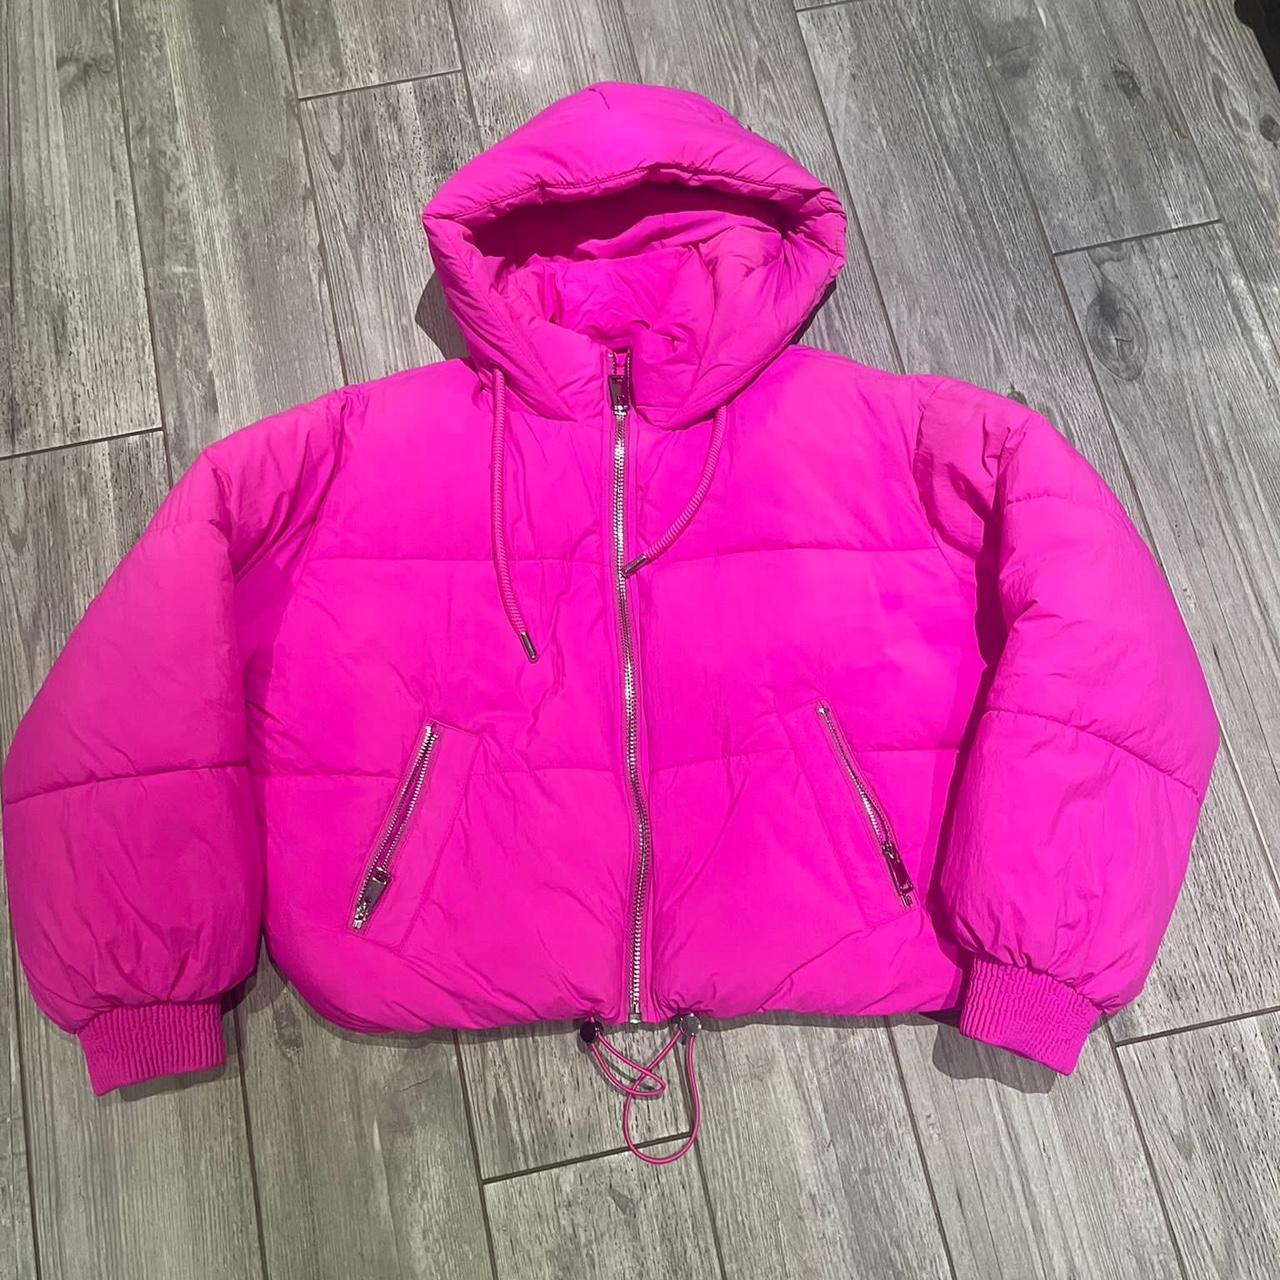 Zara hot pink coat Size xs Worn once still... - Depop